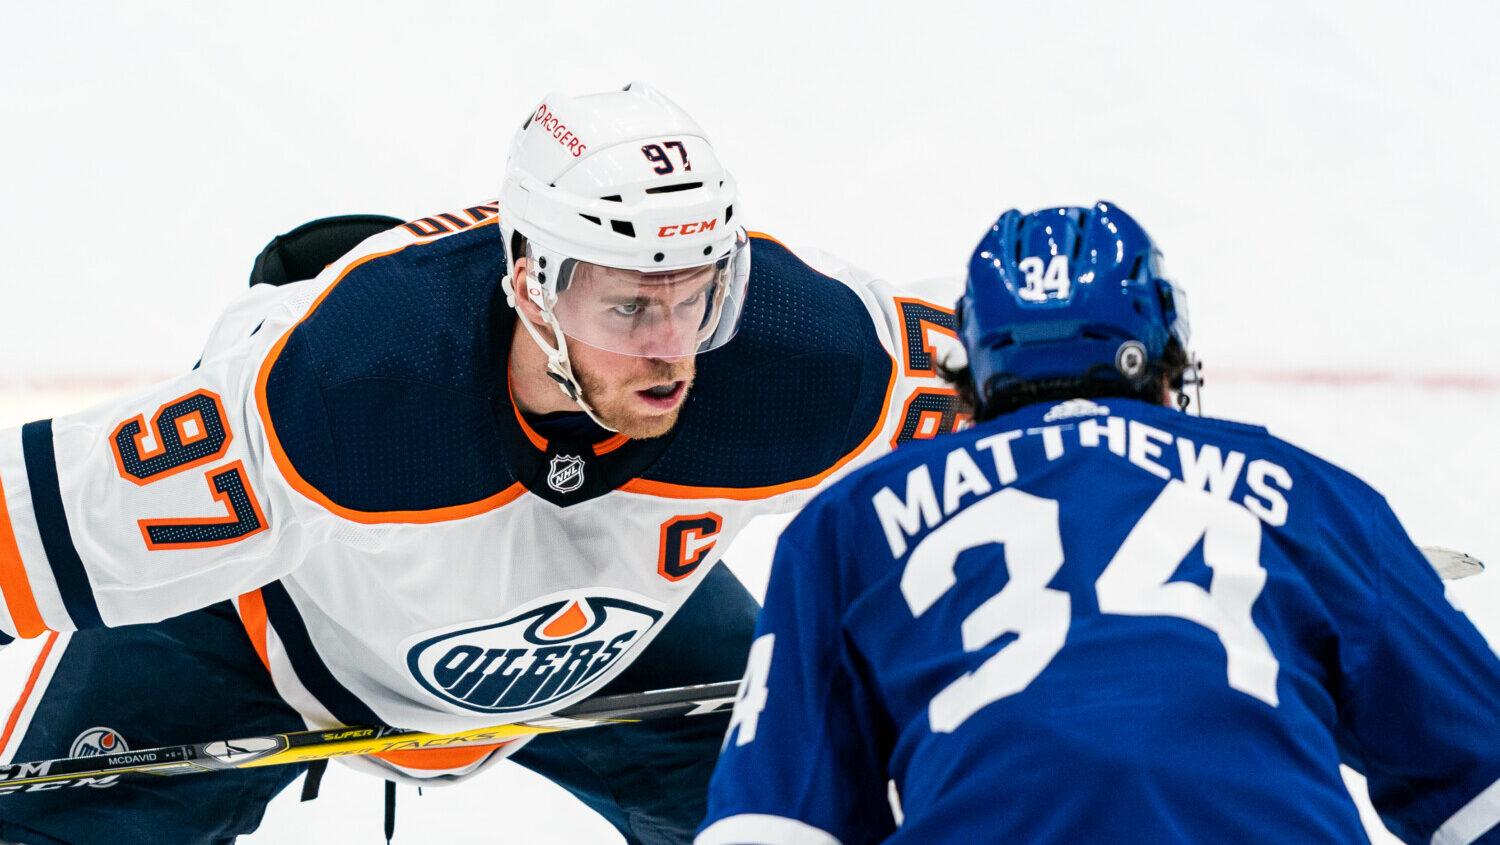 Leafs' Matthews has top-selling jersey, edging Crosby, McDavid